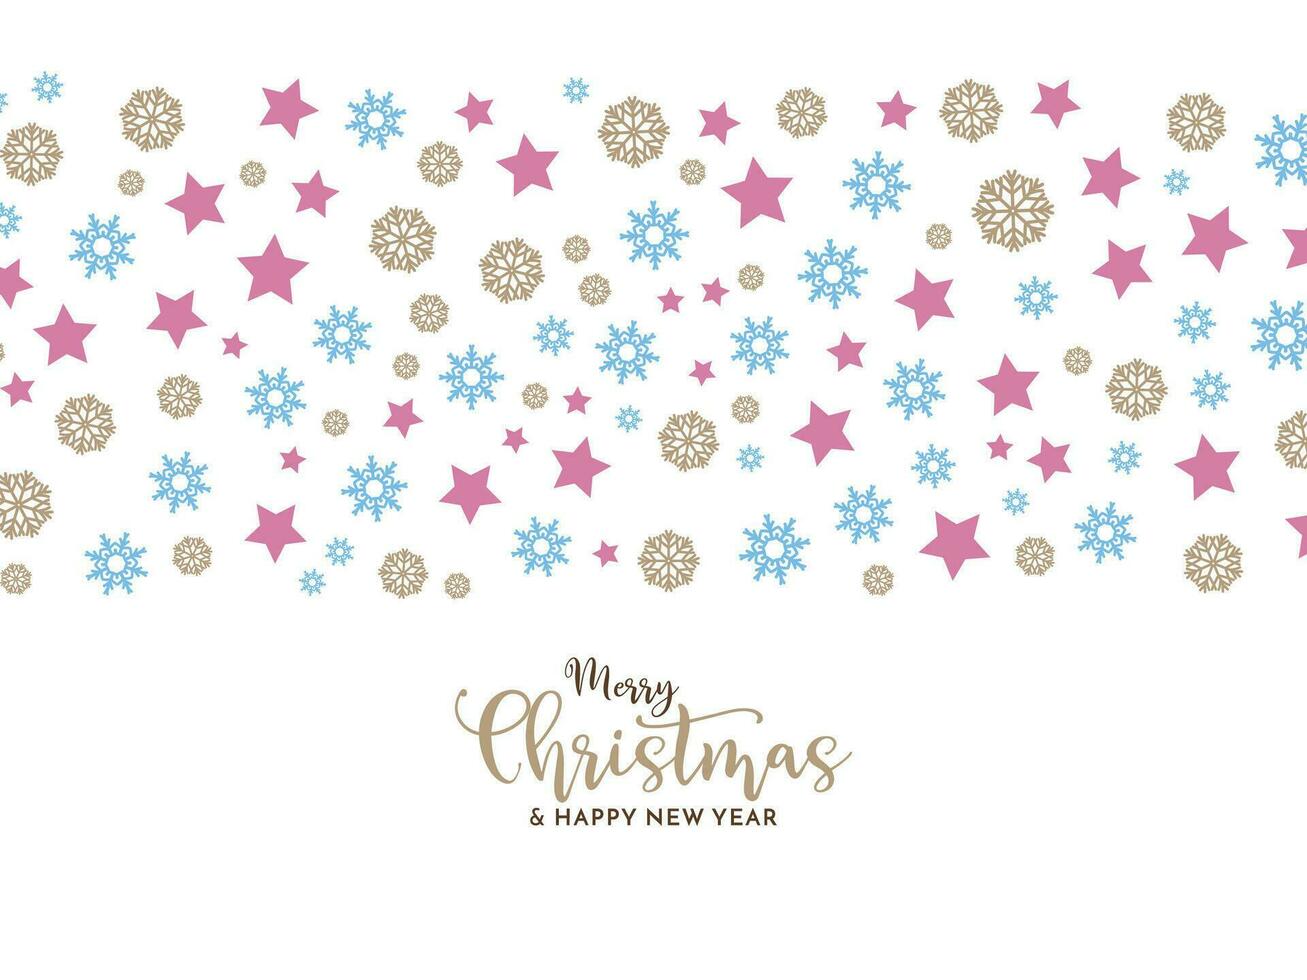 Merry Christmas festival decorative elegant greeting card vector